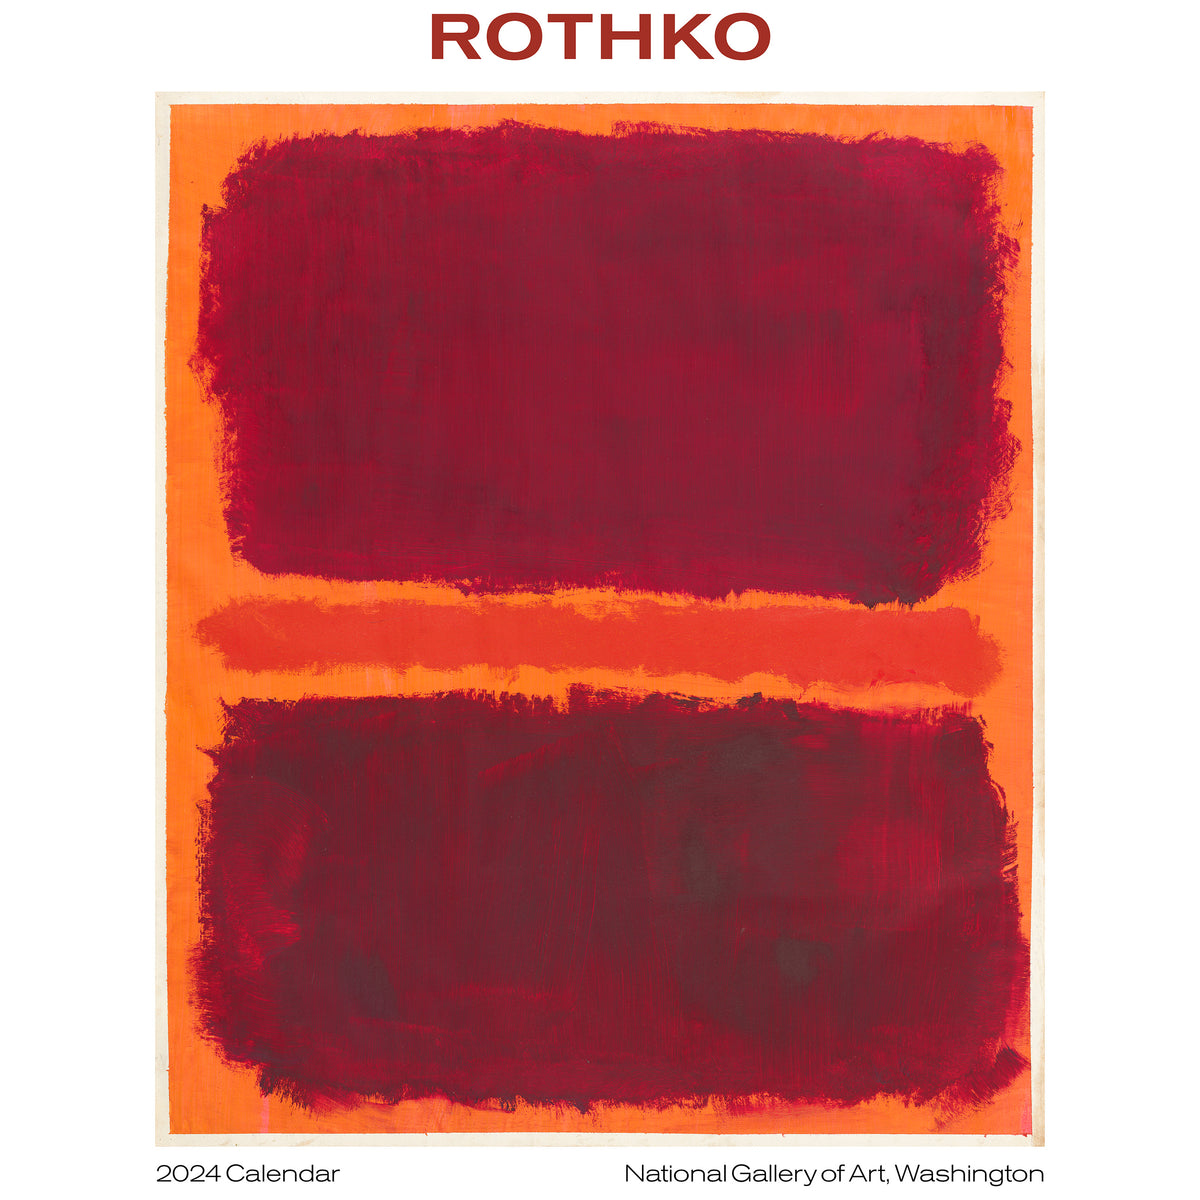 Mark Rothko 2024 – Calendrier artistique – Calendrier à affiches – 50 x 70